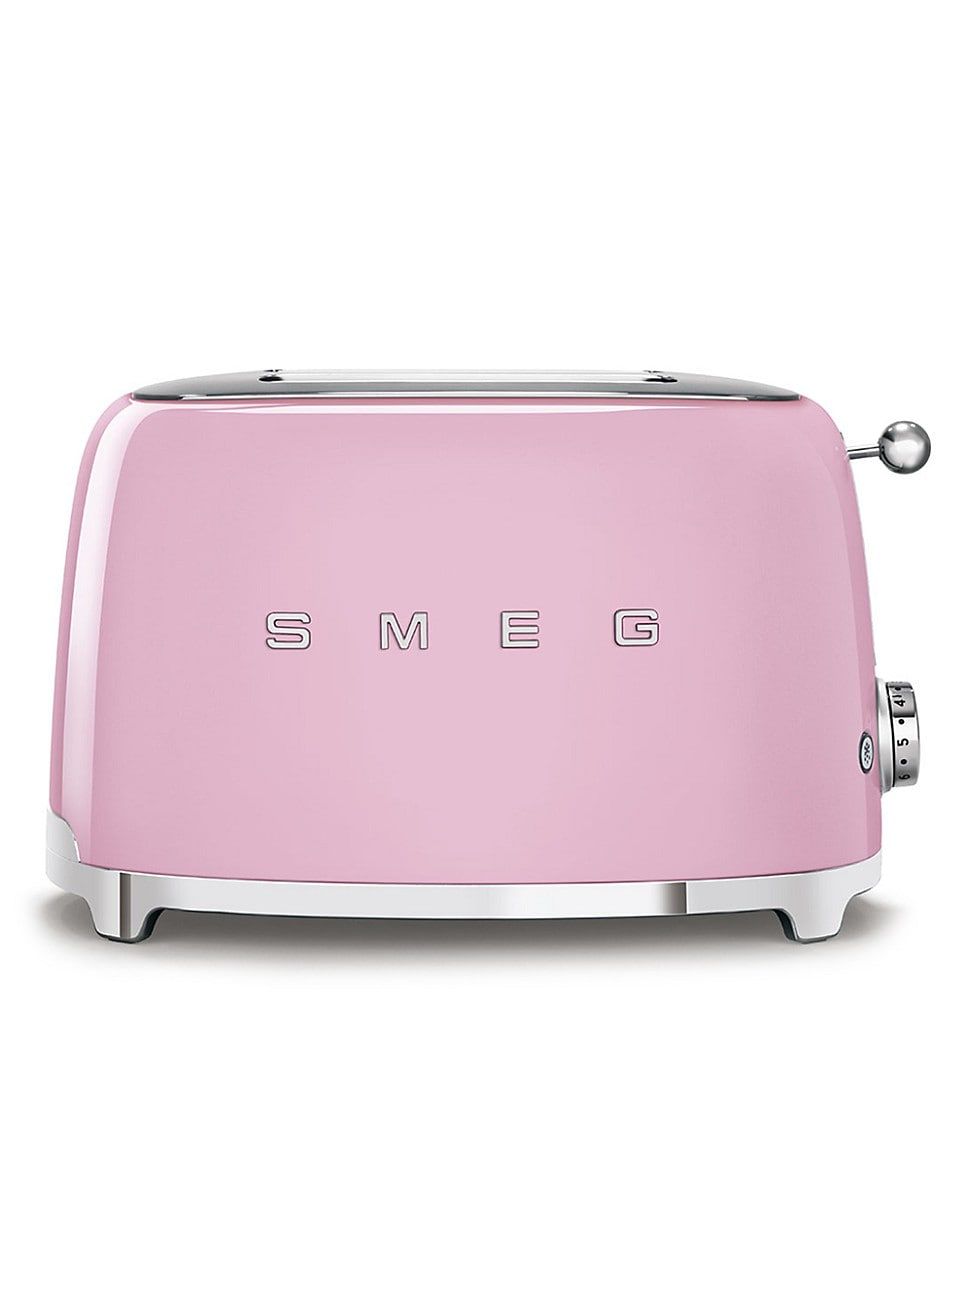 2-Slice Toaster - Pink | Saks Fifth Avenue